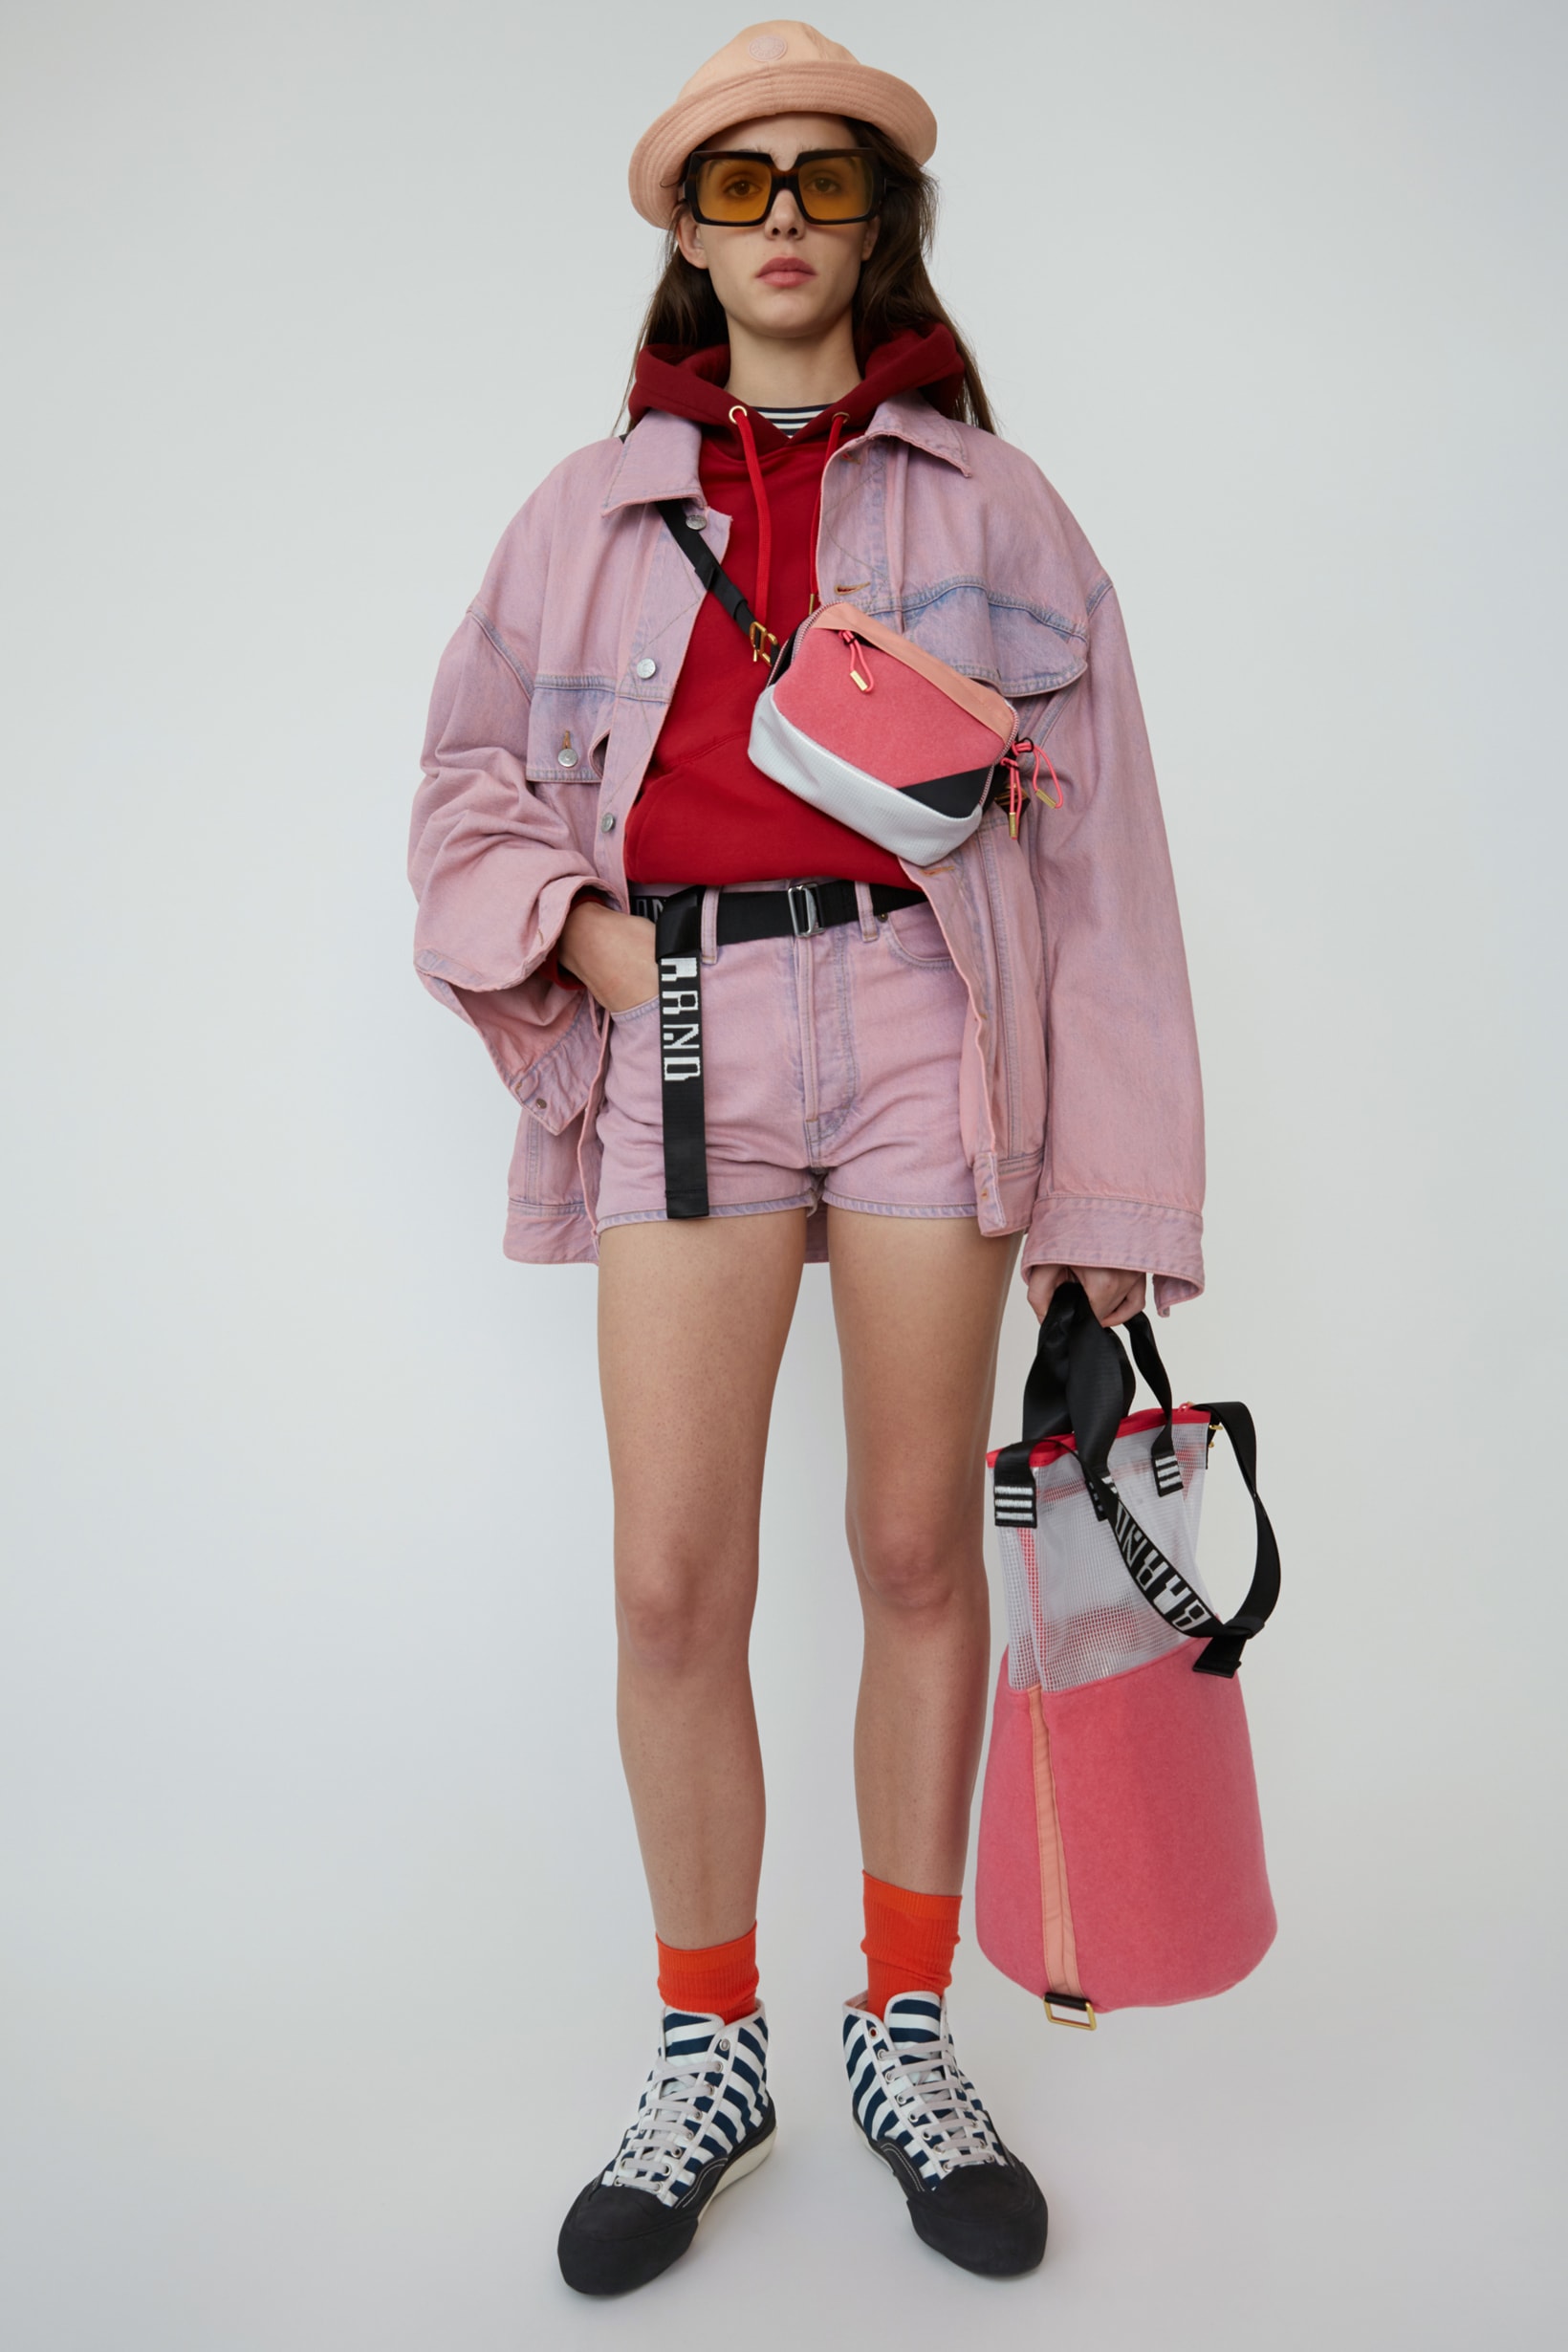 Acne Studios Spring Summer 2019 Denim Collection Jacket Shorts Pink Shirt Red